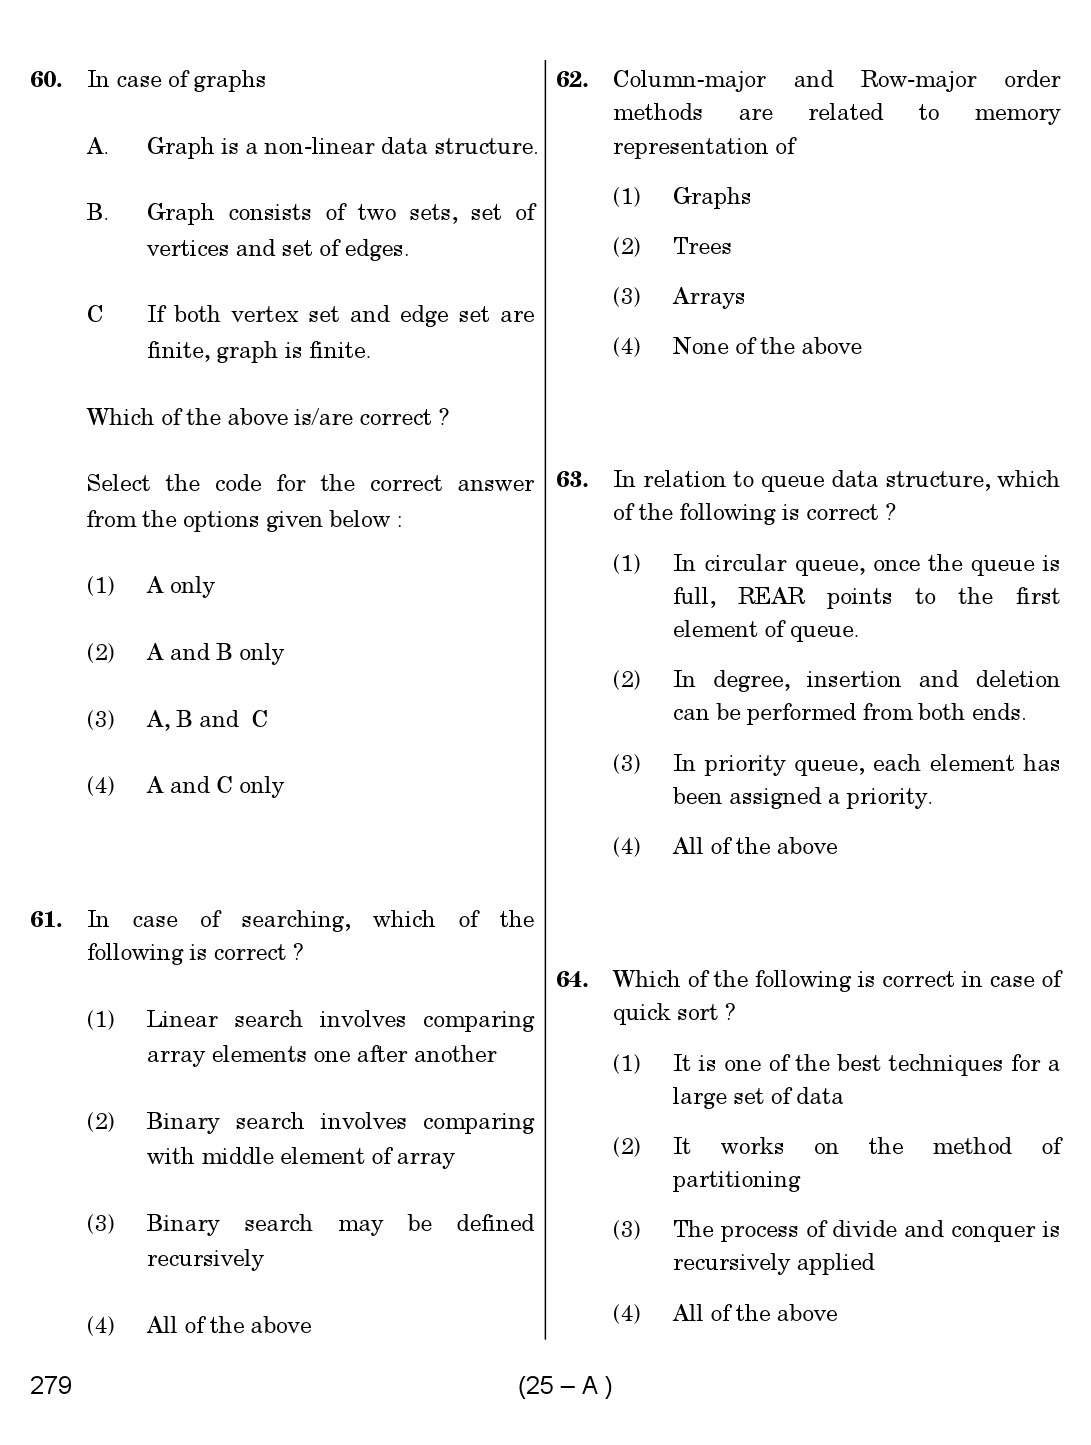 Karnataka PSC Computer Science Teachers Exam Sample Question Paper Subject code 279 25